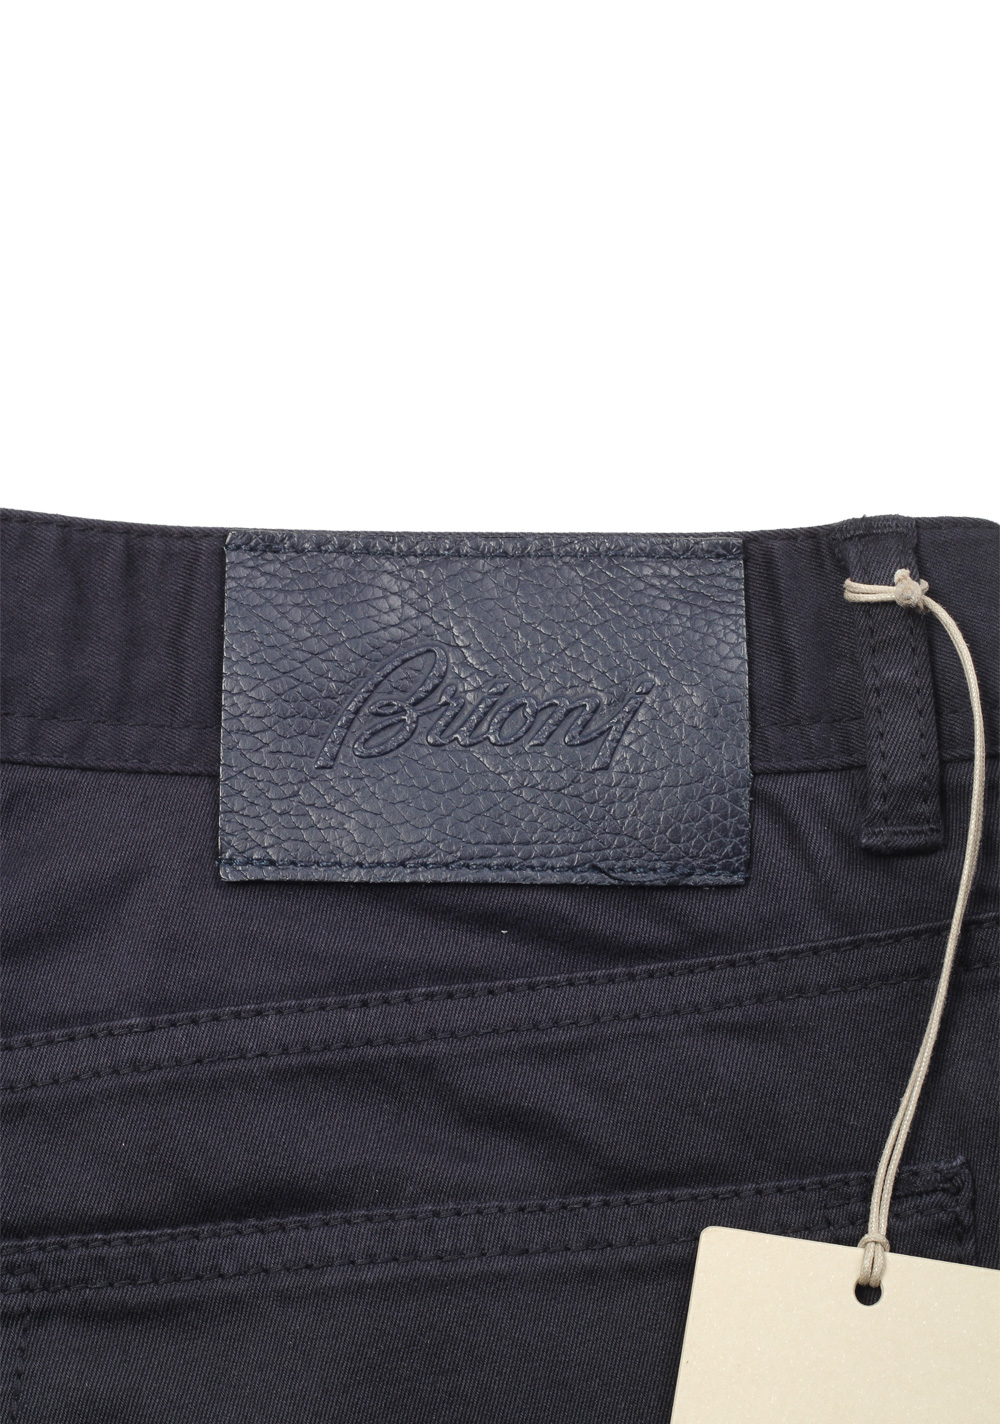 Brioni Blue Jeans Meribel SPL43O Trousers Size 52 / 36 U.S. | Costume Limité